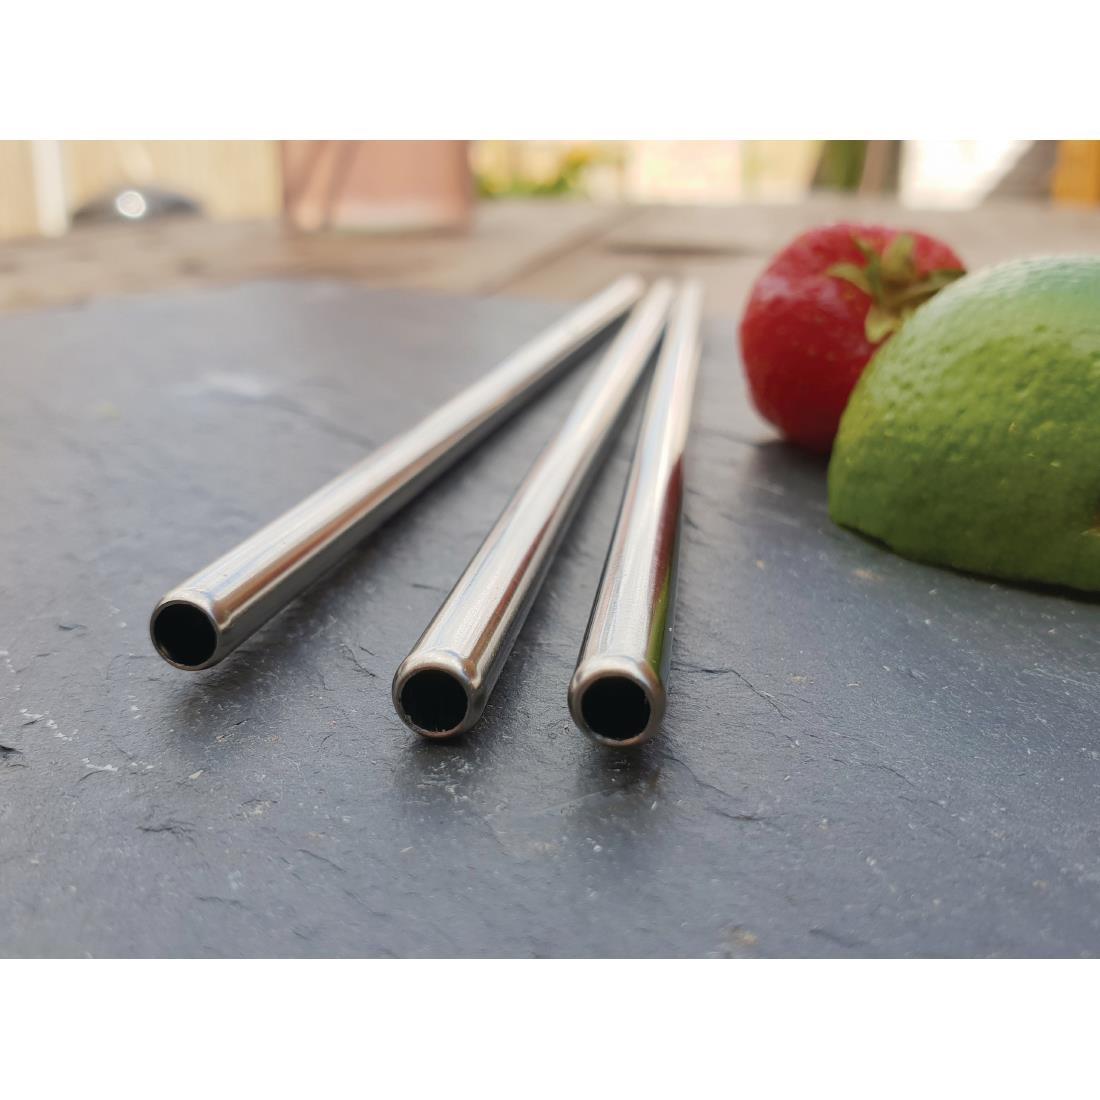 Stainless Steel Metal Straws 8.5" (Pack of 25) - CW490  - 5